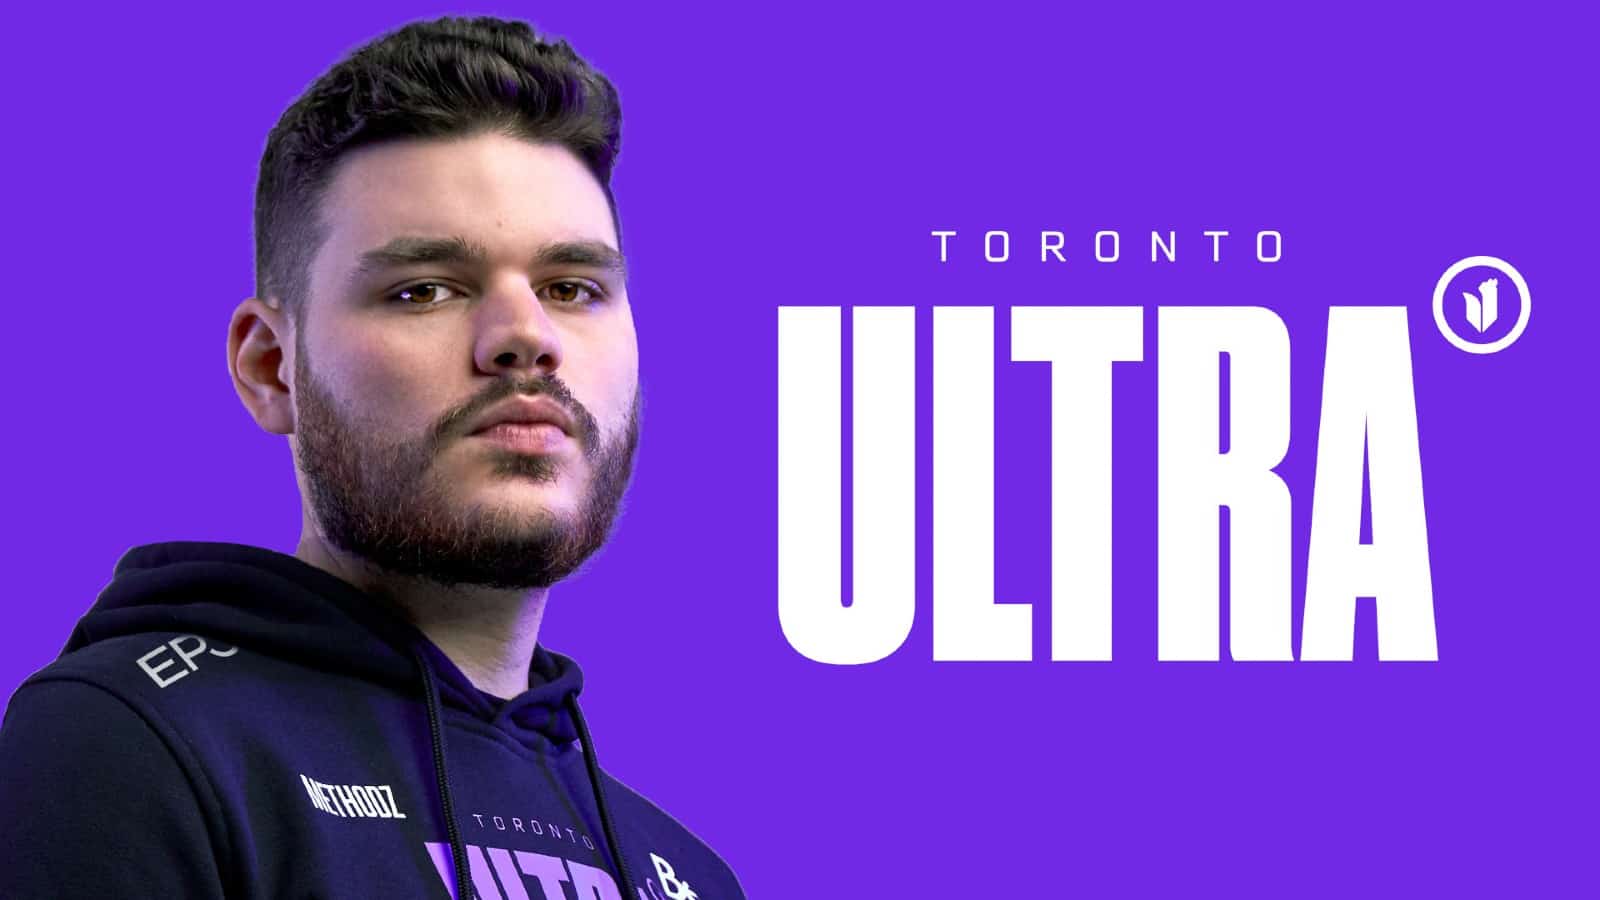 Image of Methodz with the Toronto Ultra logo